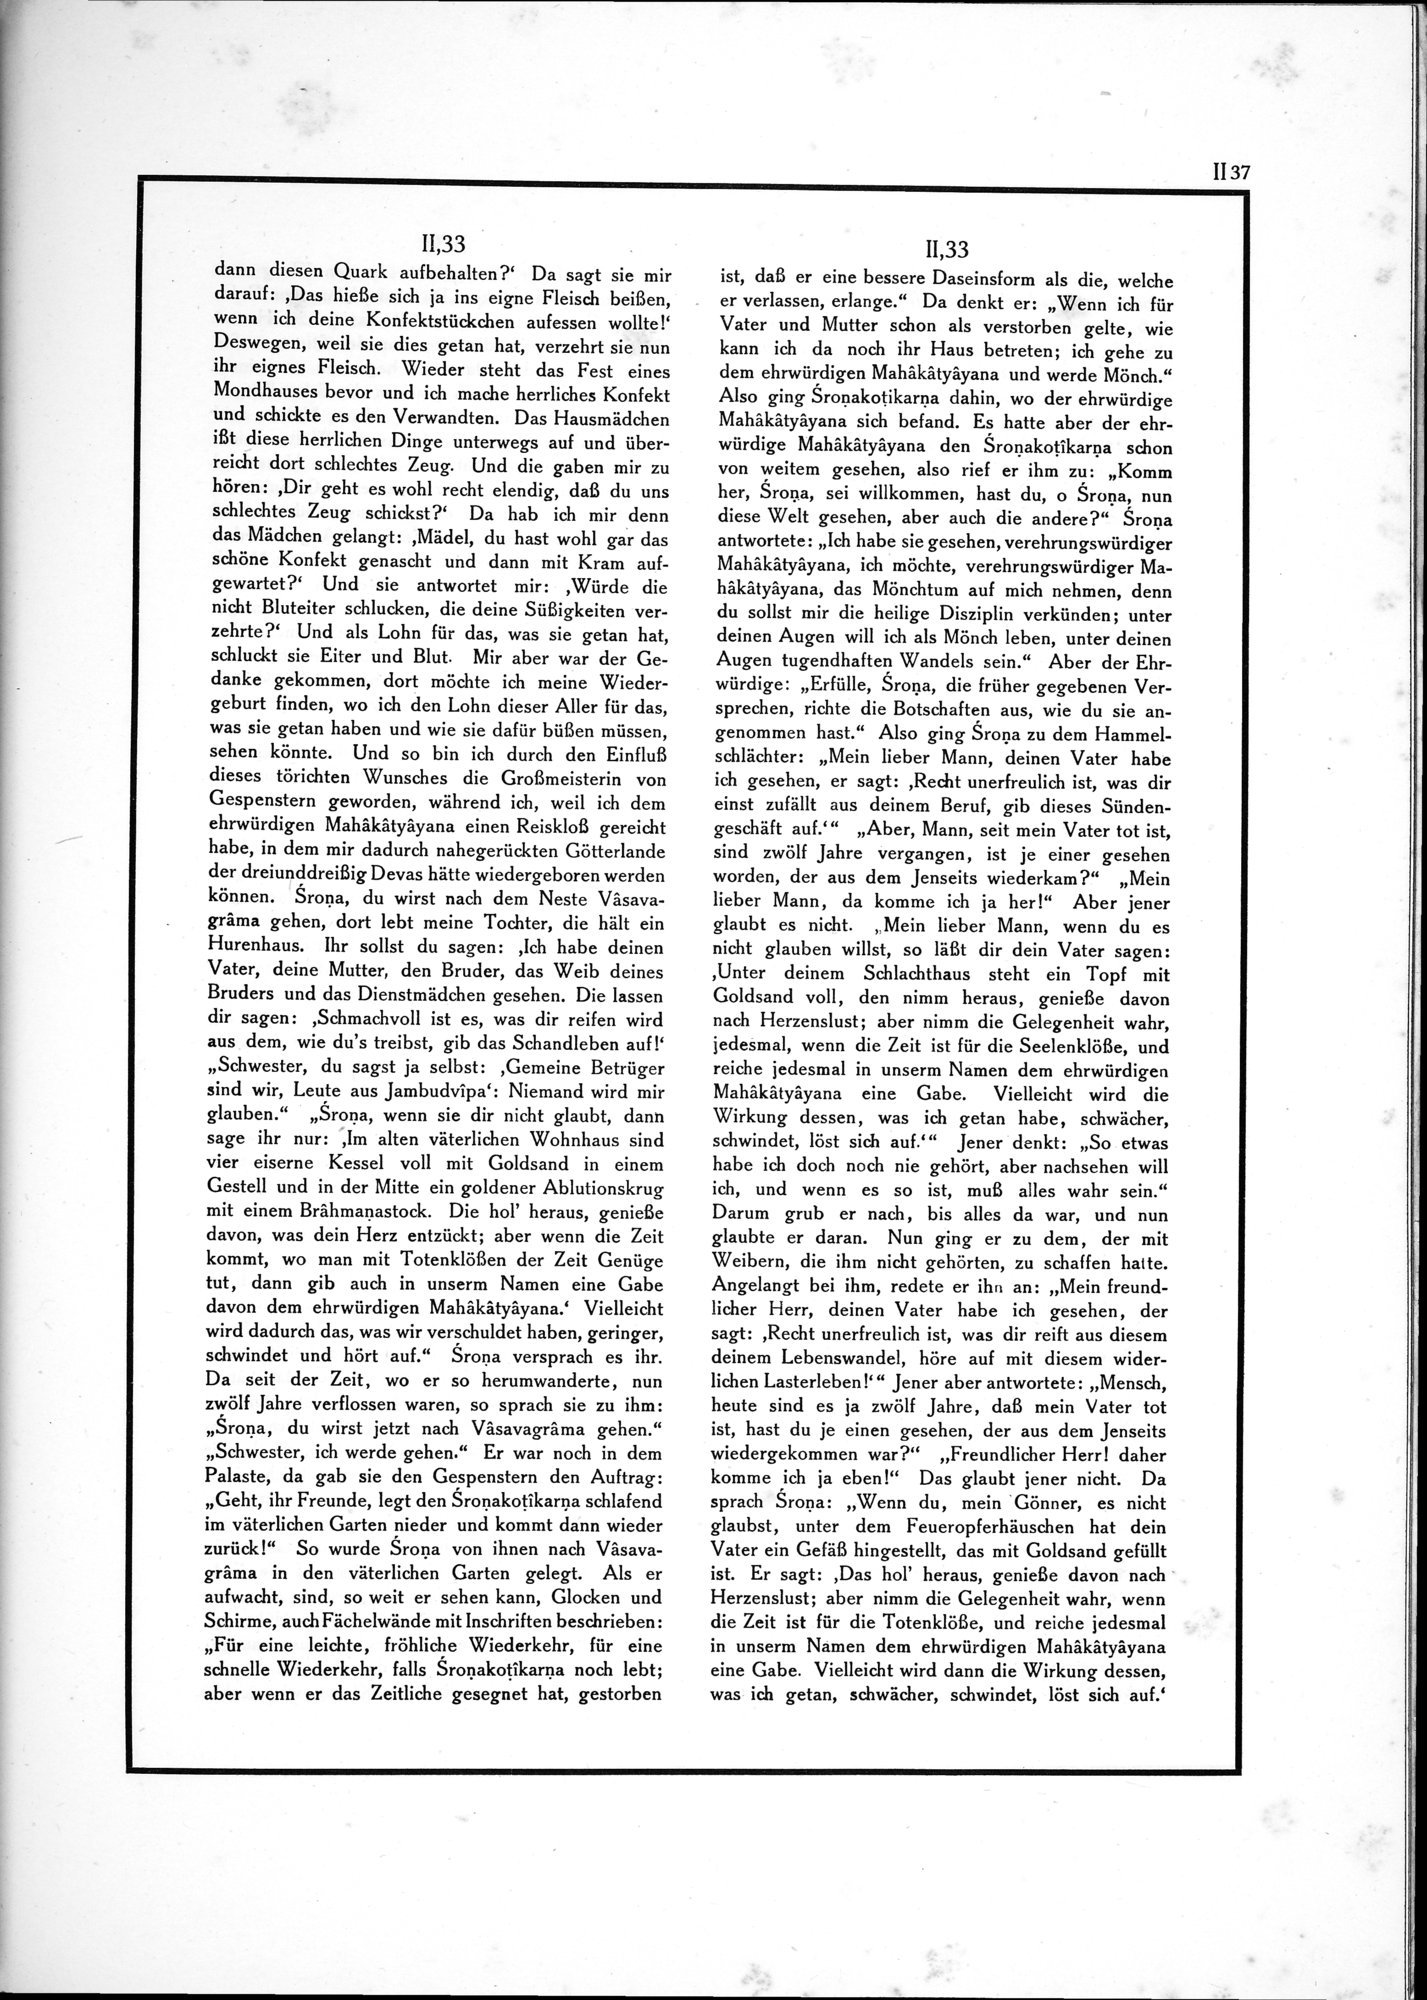 Alt-Kutscha : vol.1 / Page 143 (Grayscale High Resolution Image)